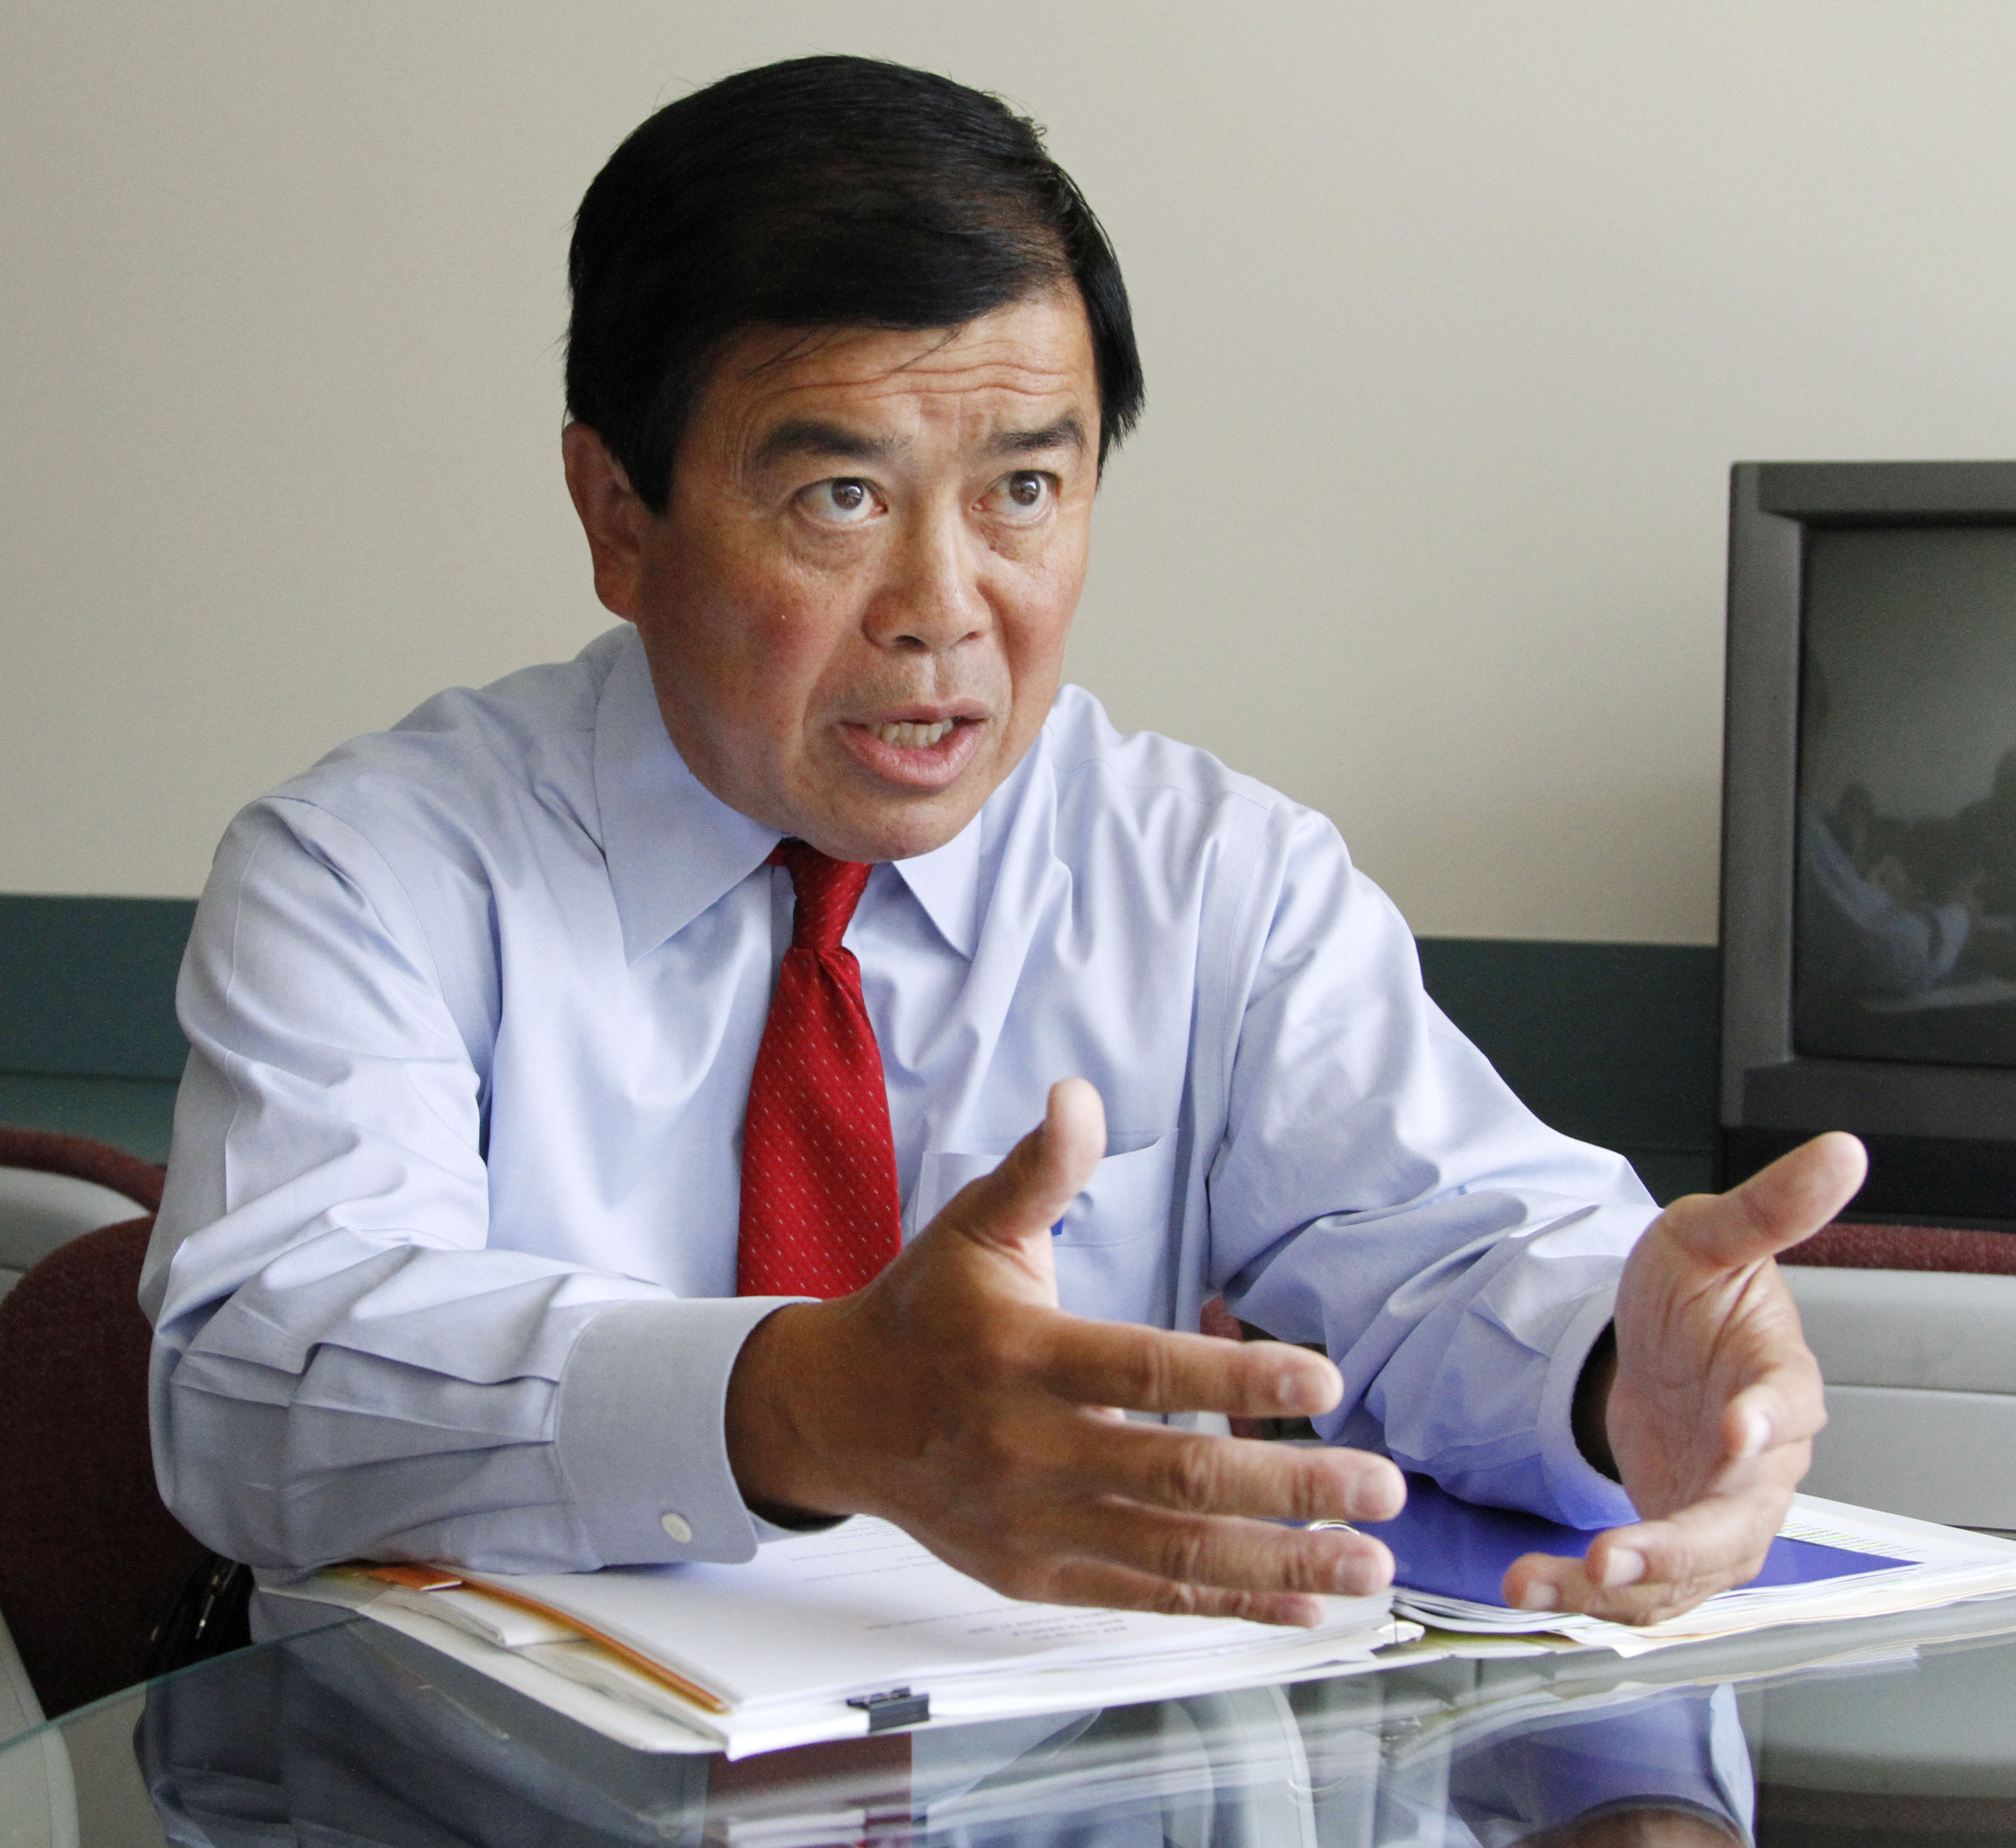 Rep David Wu Resigns In Wake Of Sex Scandal Cbs News 